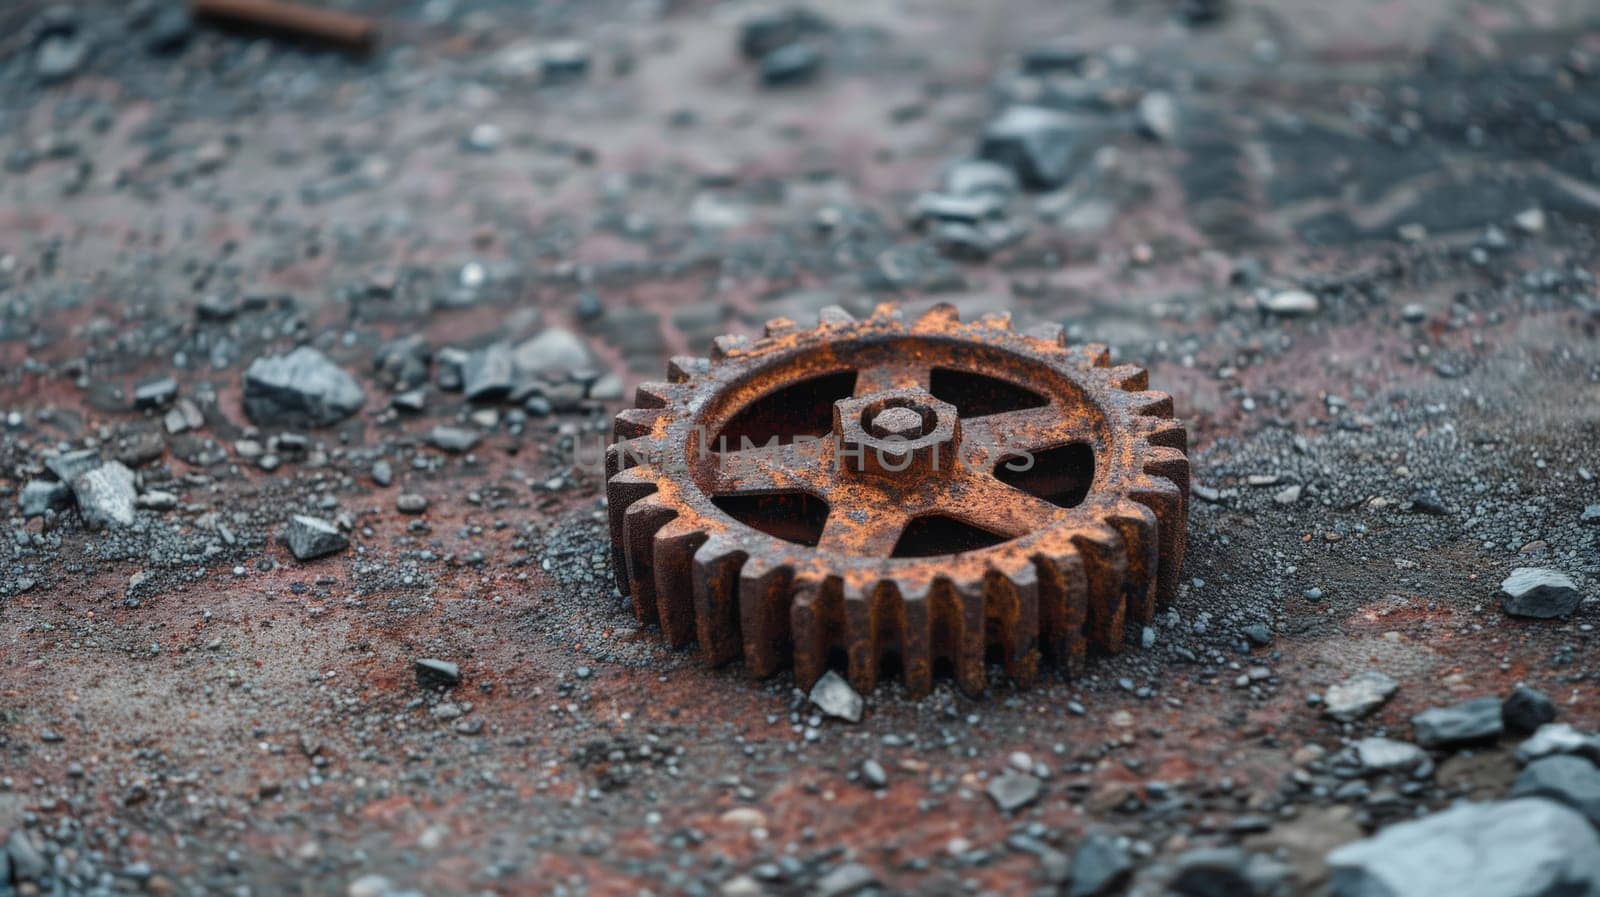 small rust gear wheel on the ground, Rusty Gears.